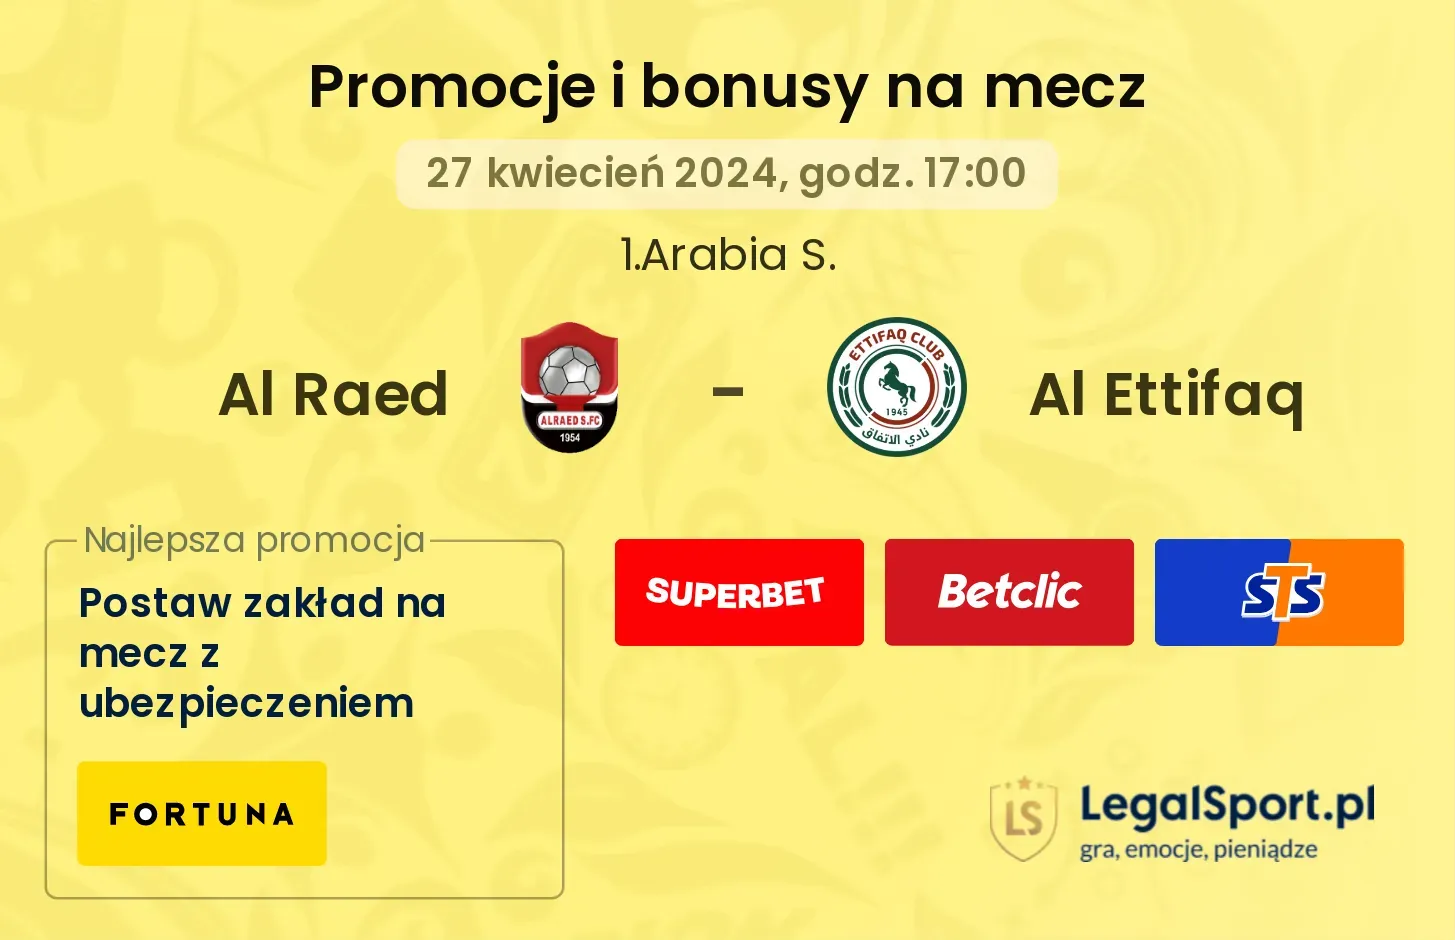 Al Raed - Al Ettifaq promocje bonusy na mecz